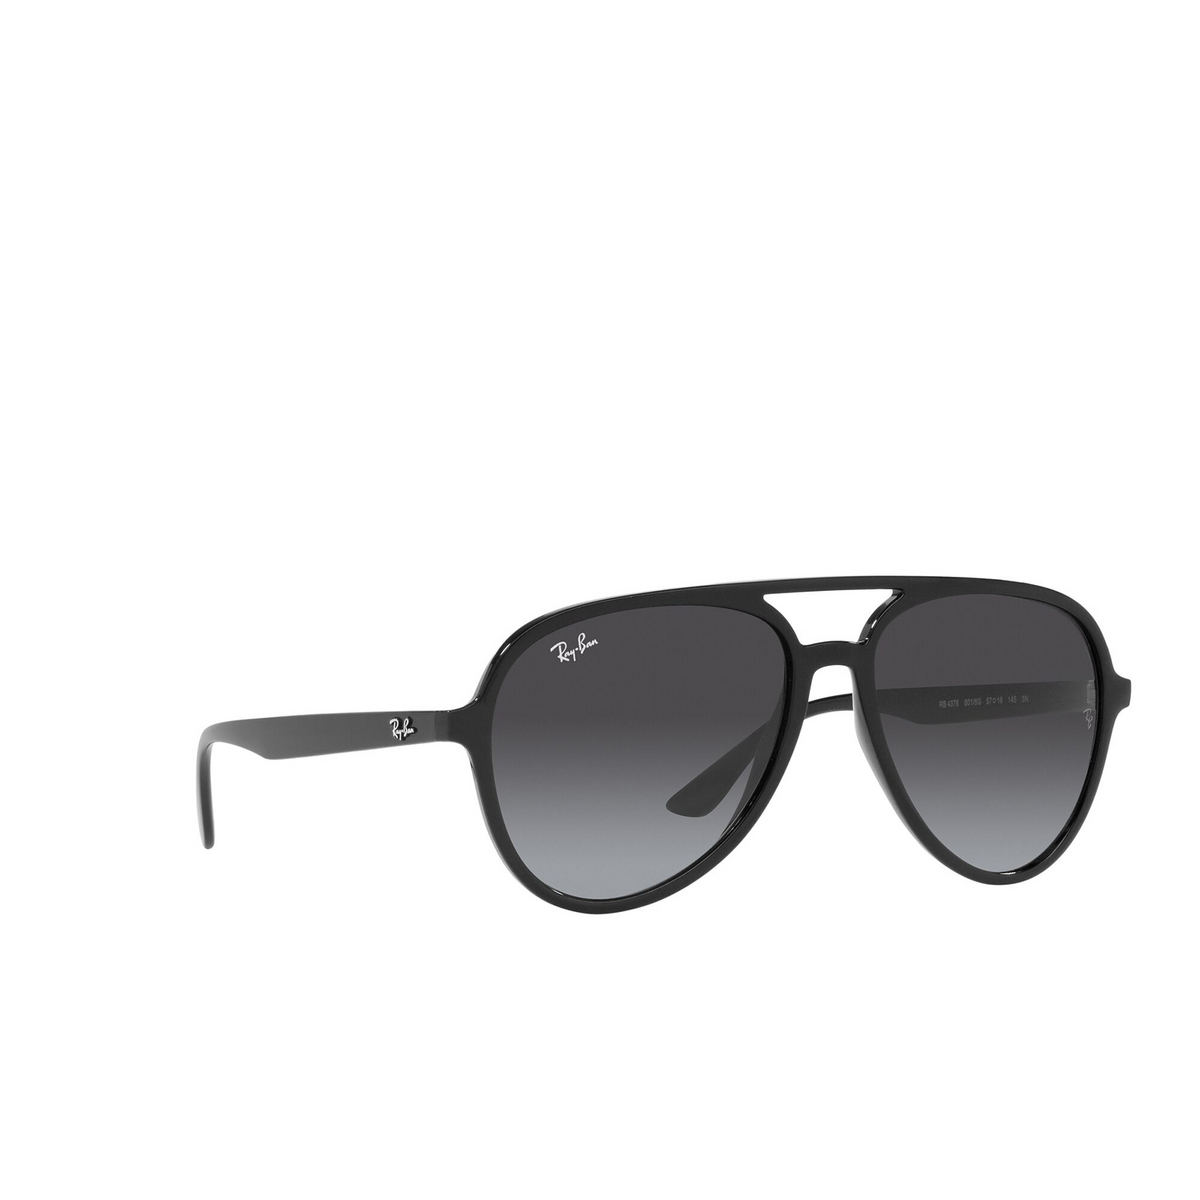 Ray-Ban® Aviator Sunglasses: RB4376 color Black 601/8G - three-quarters view.